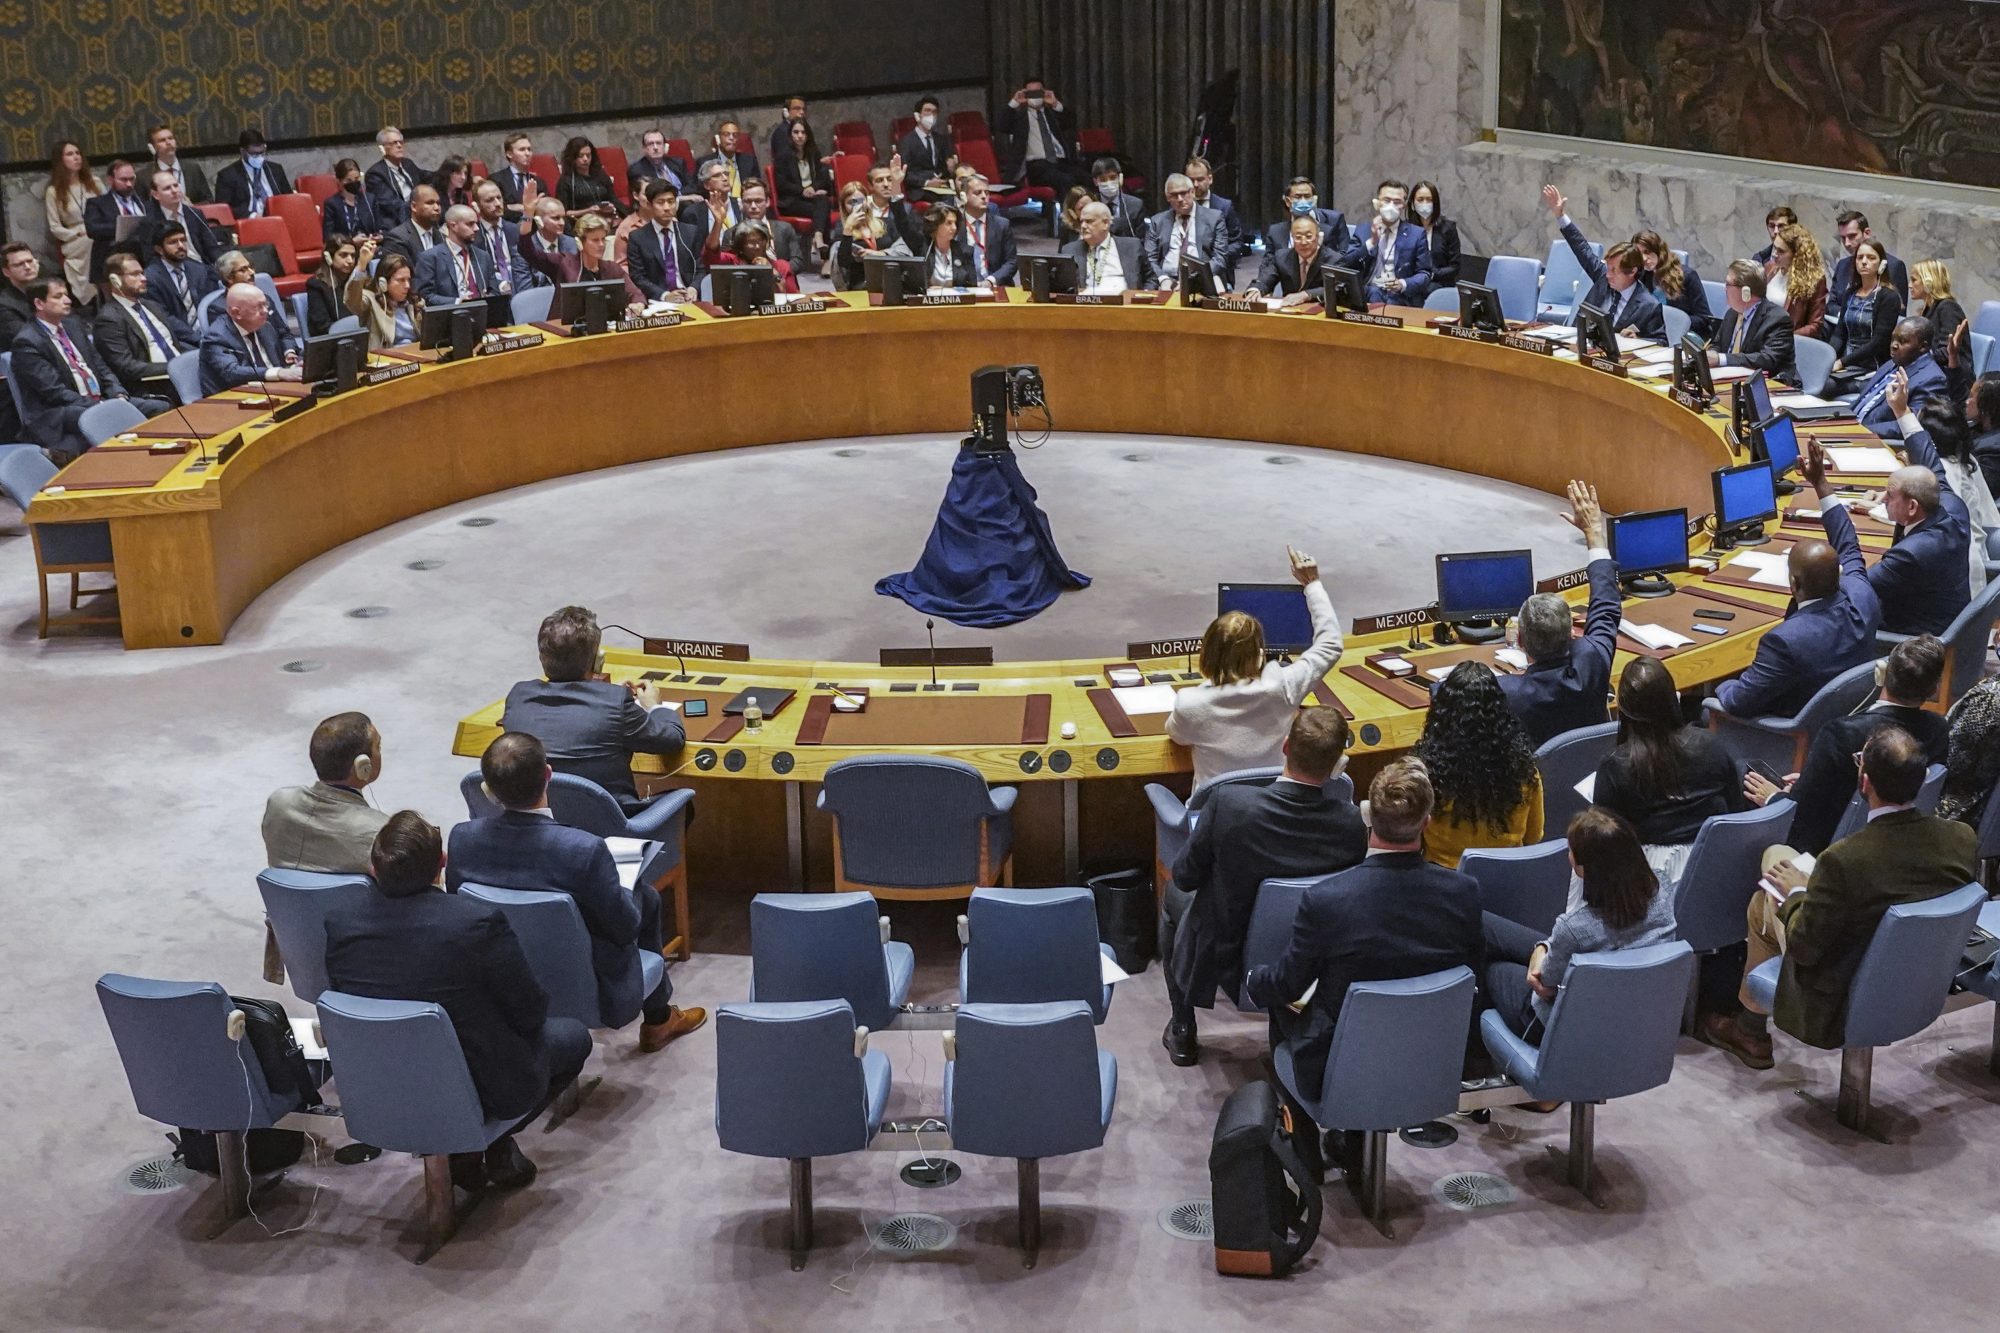 Russia vetoes UN resolution condemning Putin’s annexation of Ukrainian territory